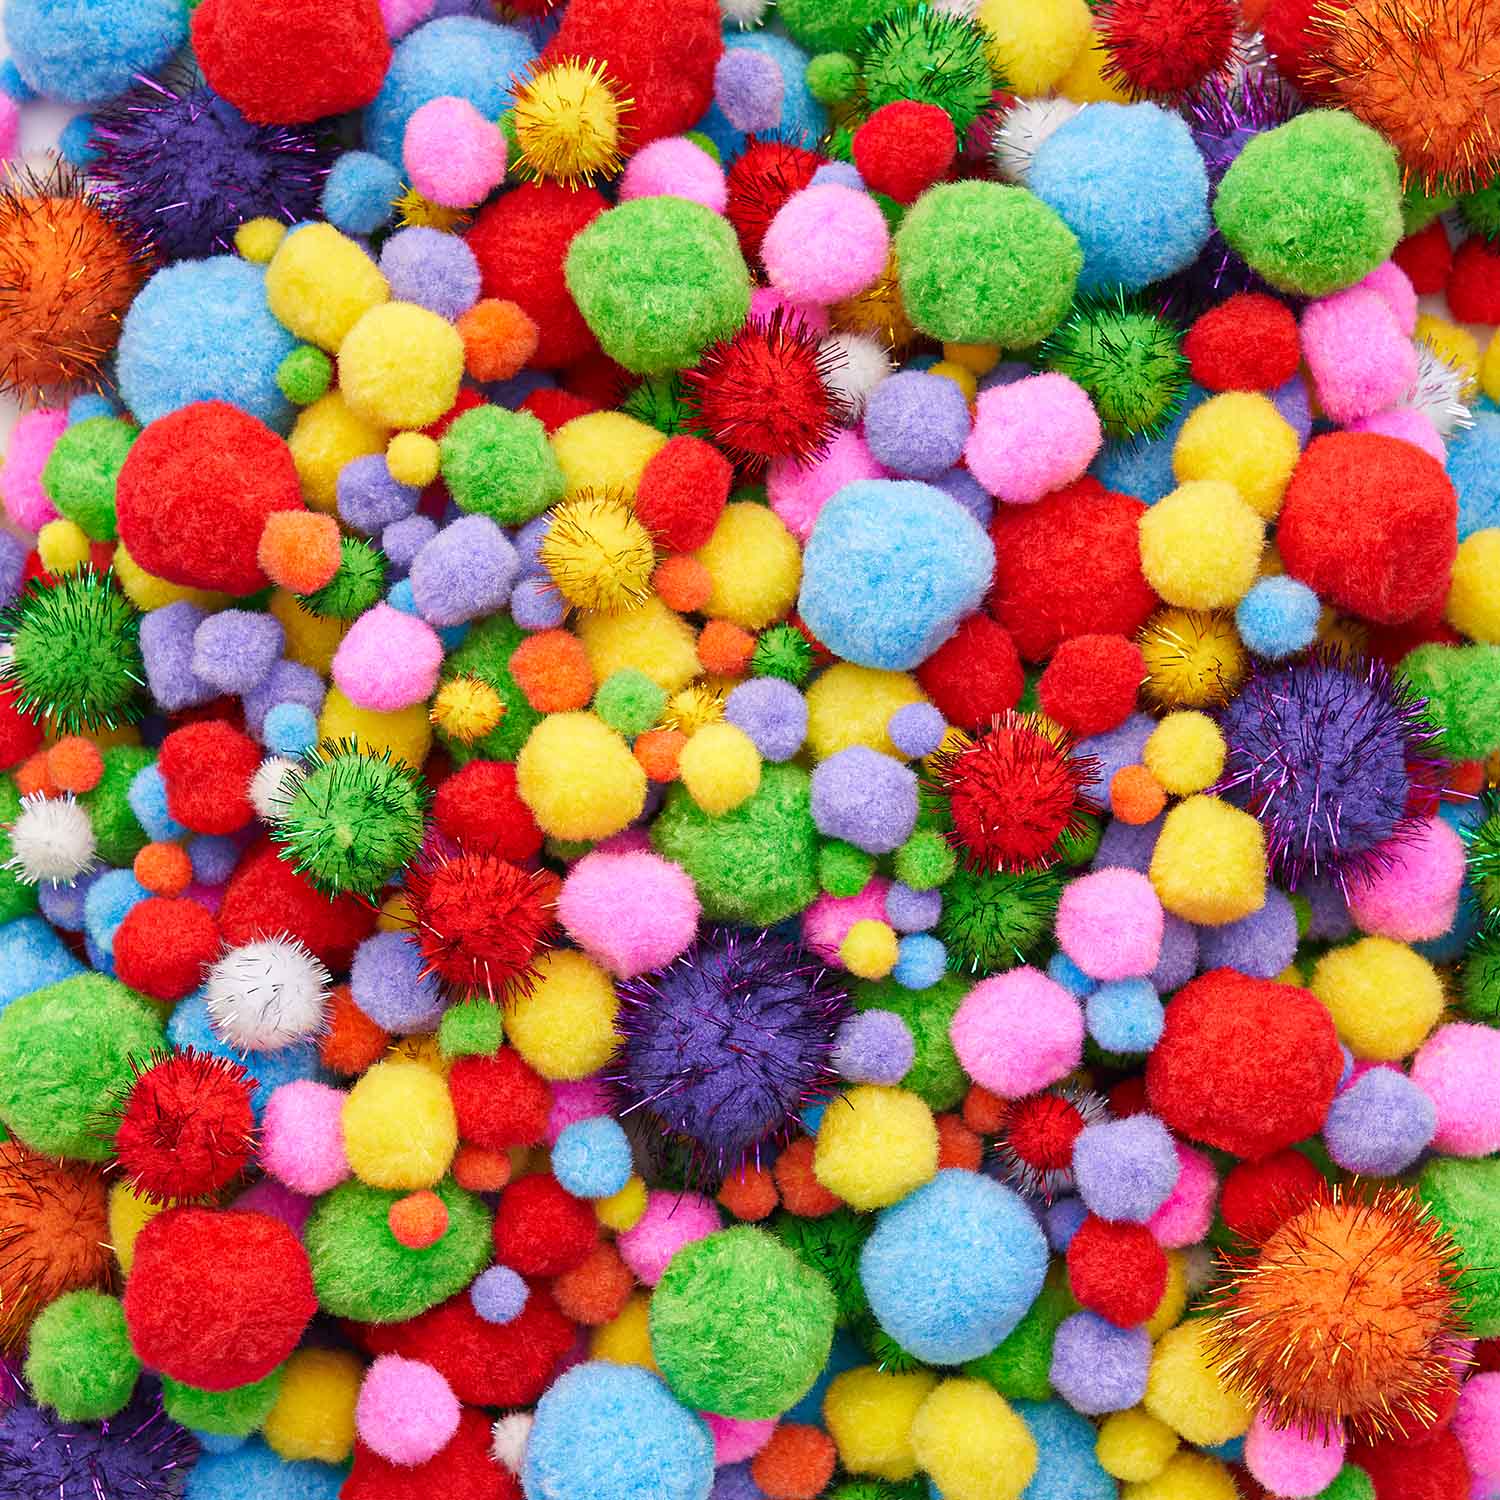 Mua Mr. Pen- Pom Poms Assorted Sizes, 360 Vibrant Colors Pom Poms